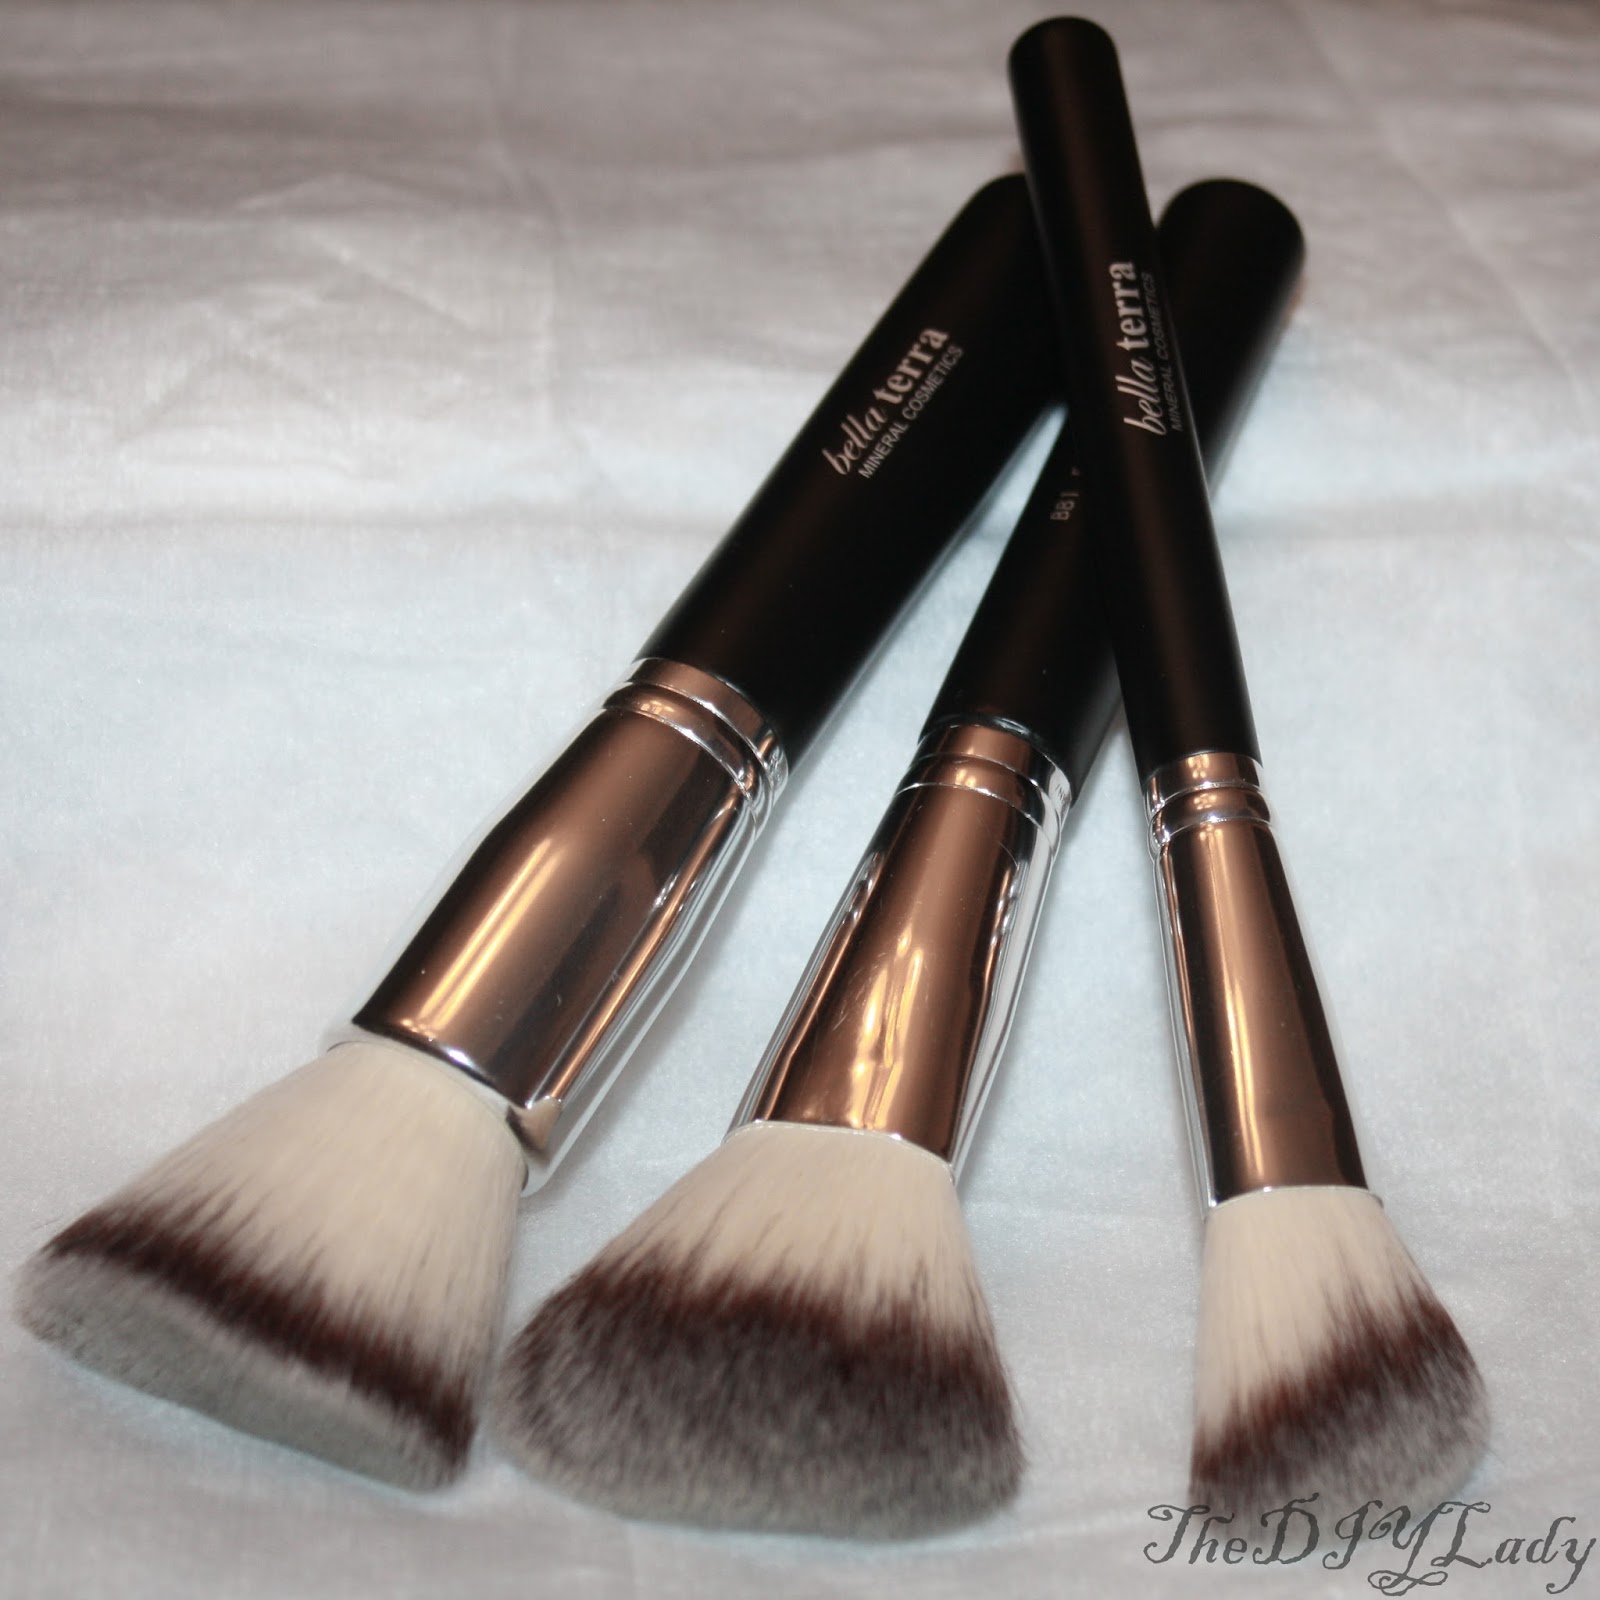 Makeup Brushes from Bella Terra Cosmetics